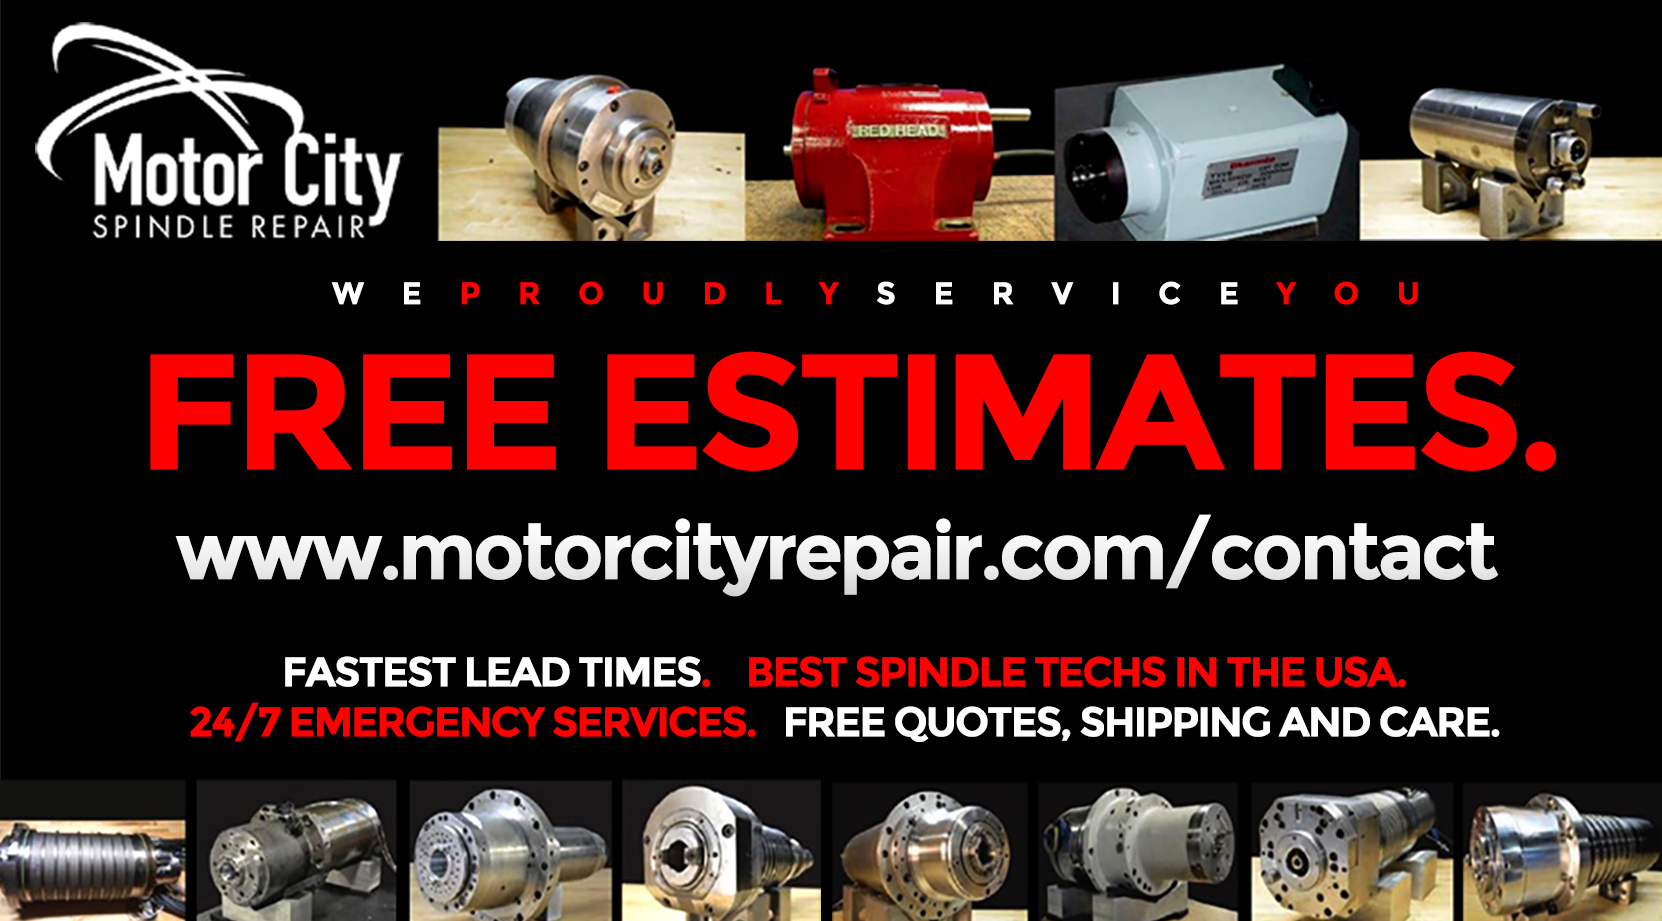 Contact Motor City Spindle Repair - Free Estimates